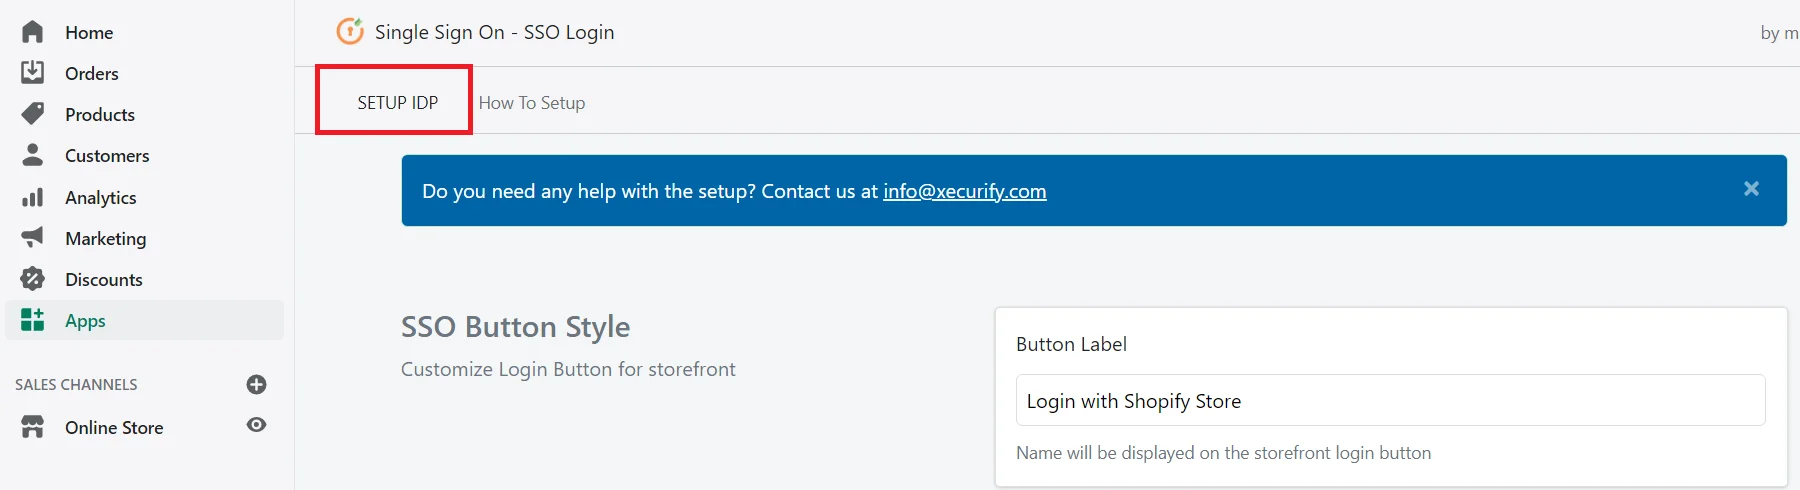 Shopify Single Sign-On (SSO) - Setup Identity Provider (IDP) in Shopify